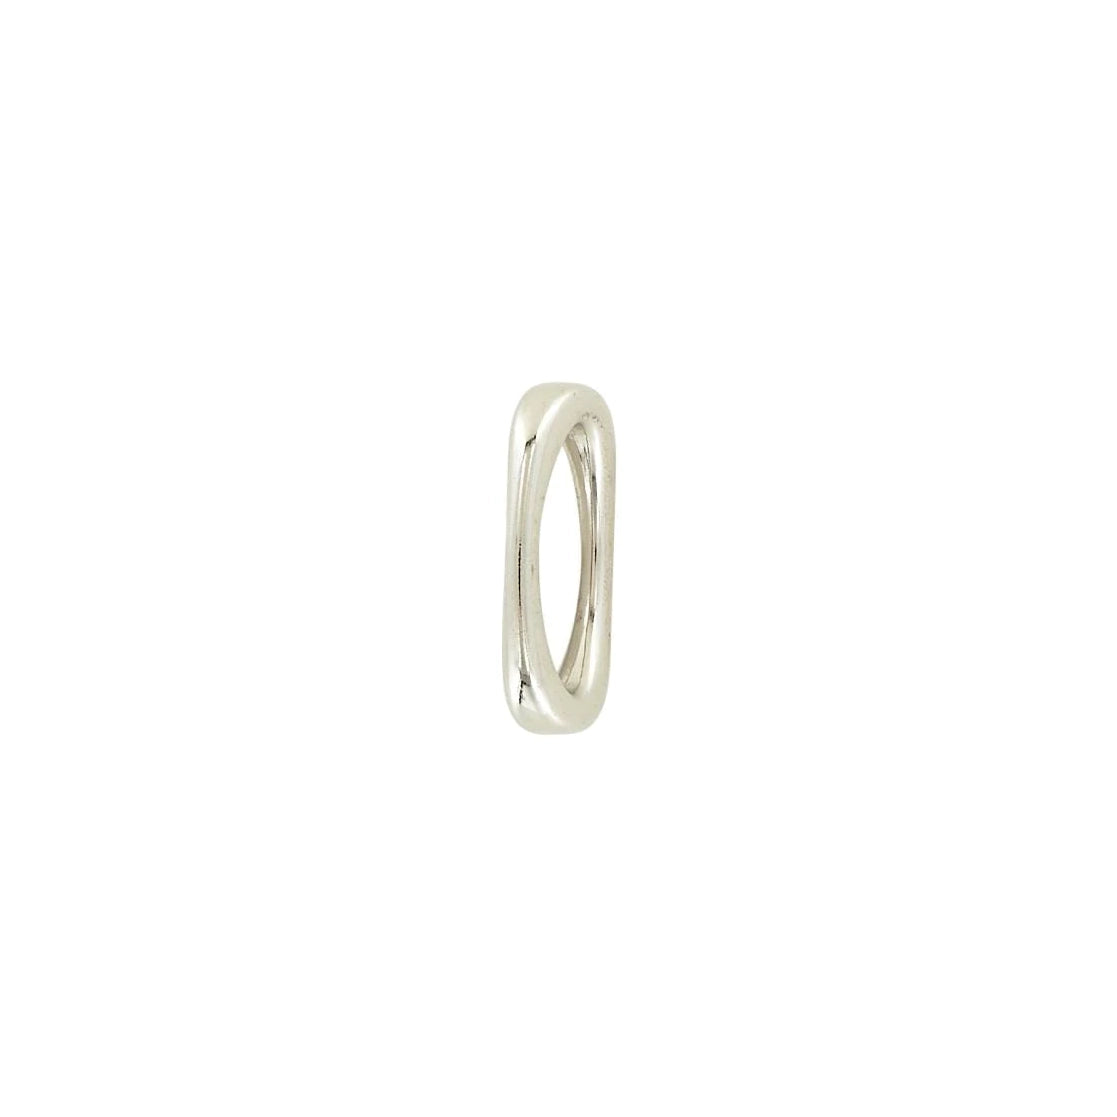 1" Shiny Nickel, Oval Ring, Zinc Alloy, #P-2987-NIC